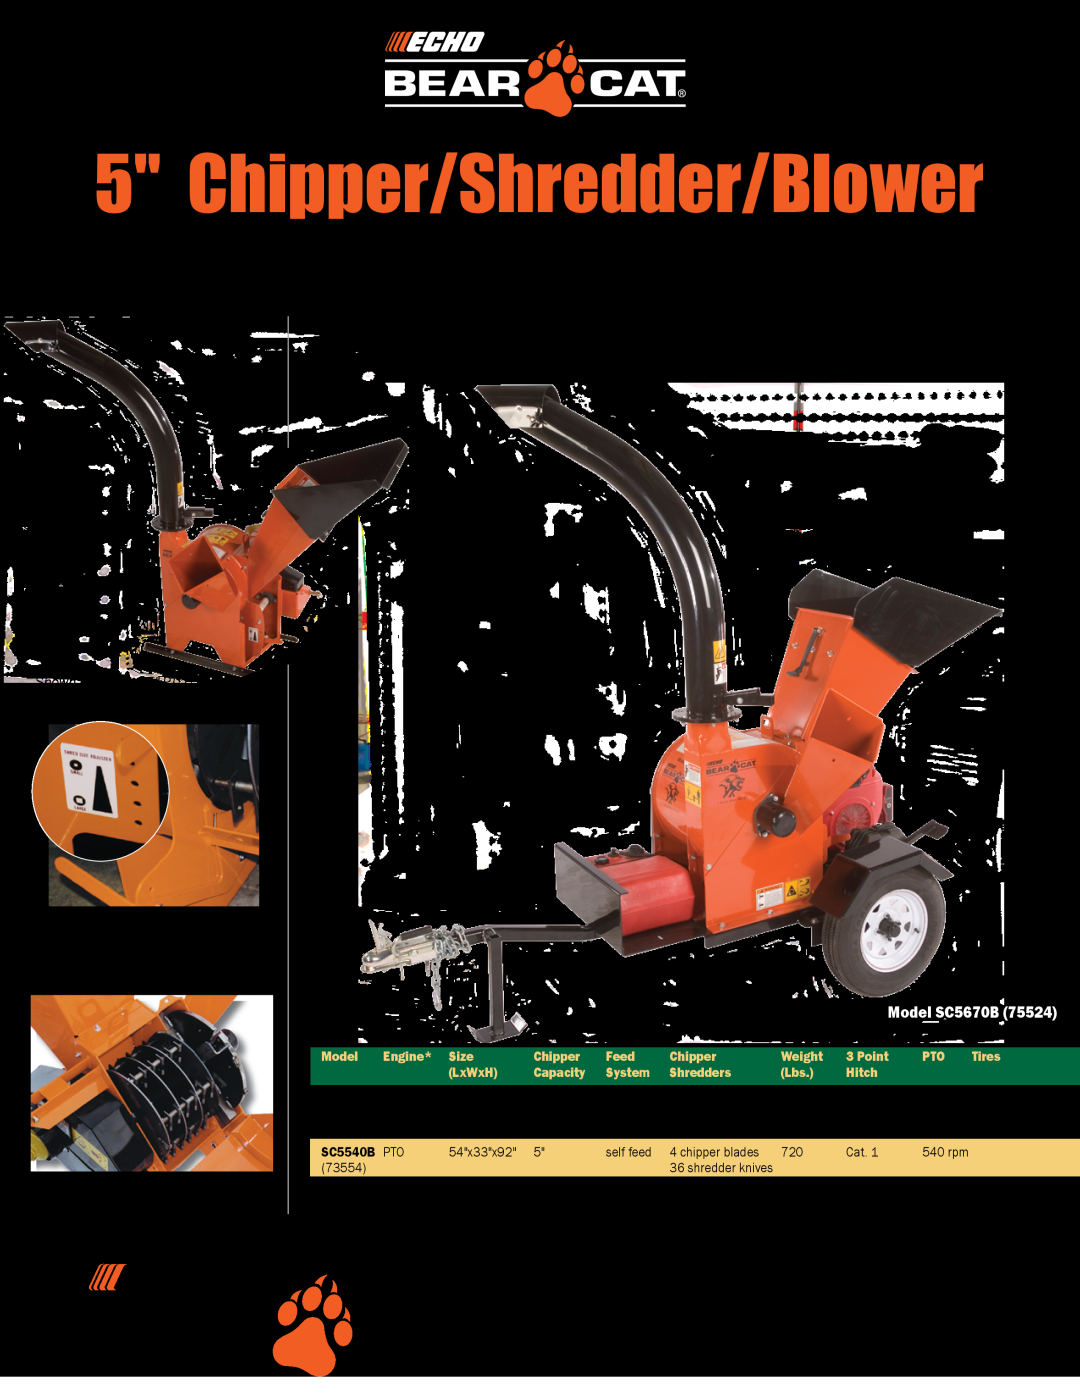 Echo Bear Cat SC5670B (75524) manual Chipper/Shredder/Blower, Find a dealer near you, Call us at 800.247.7335 or, Model 